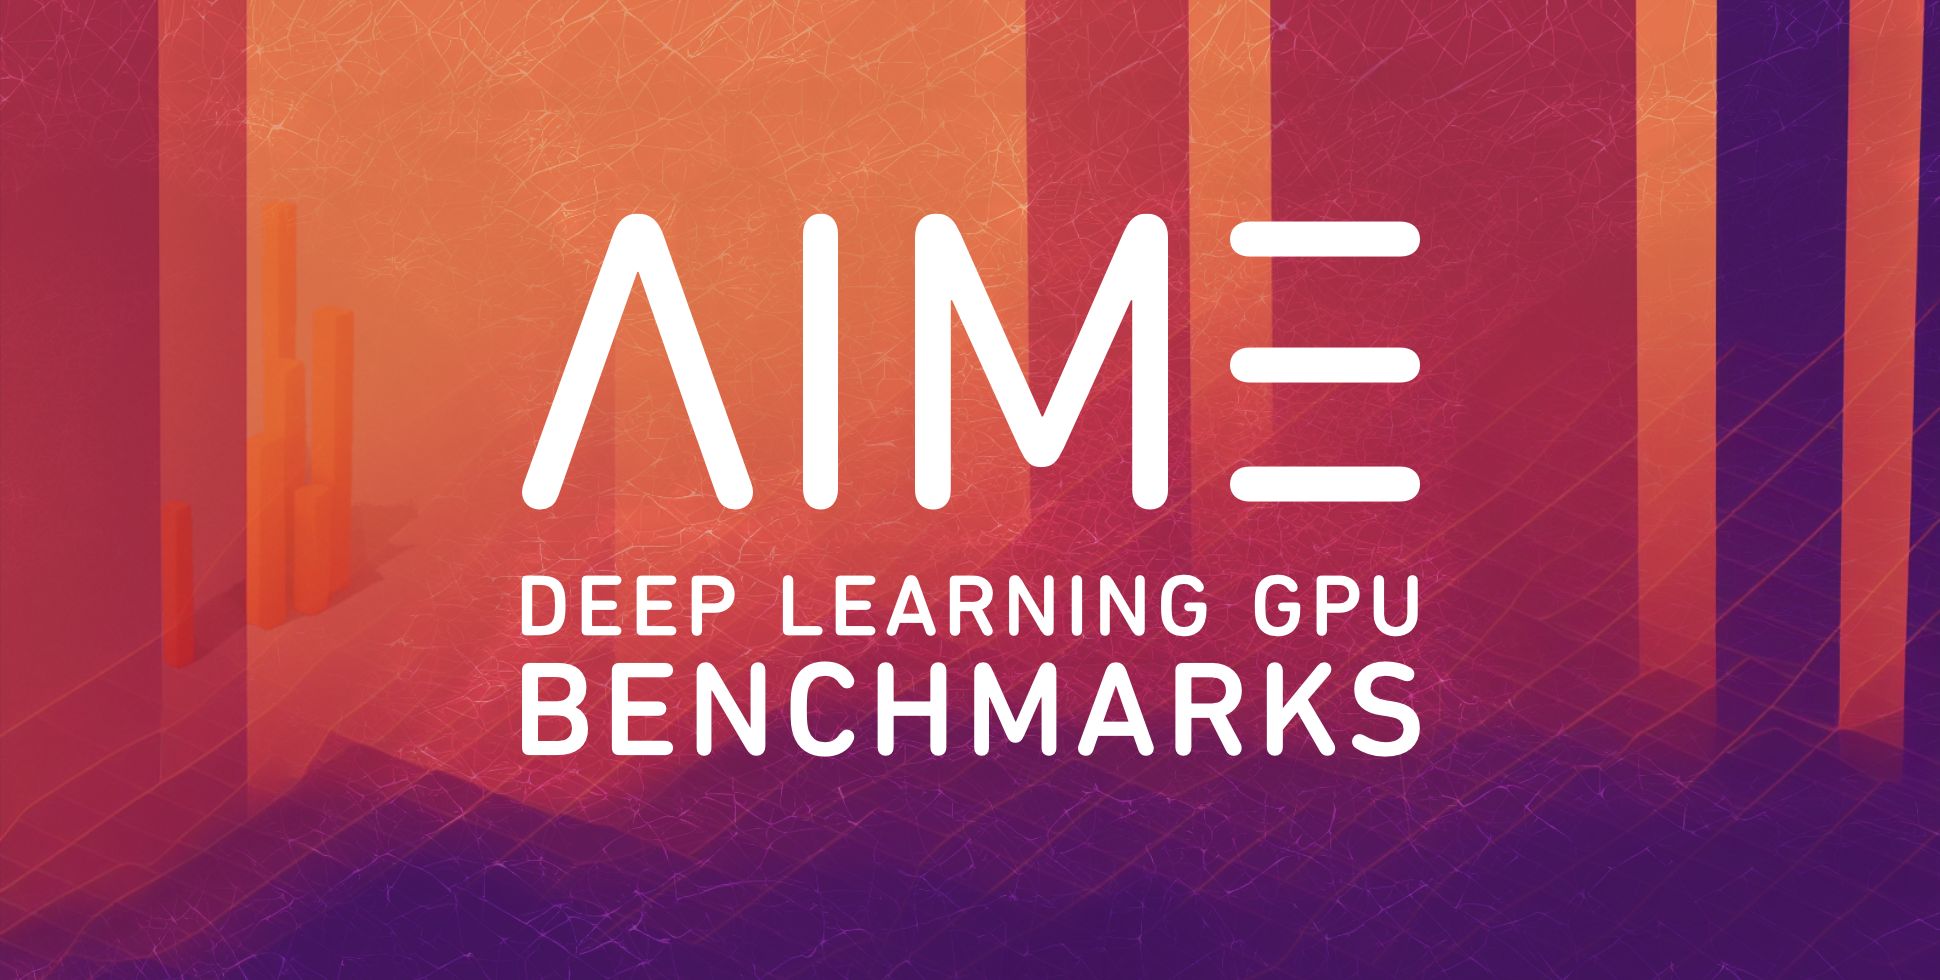 Deep Learning GPU Benchmarks